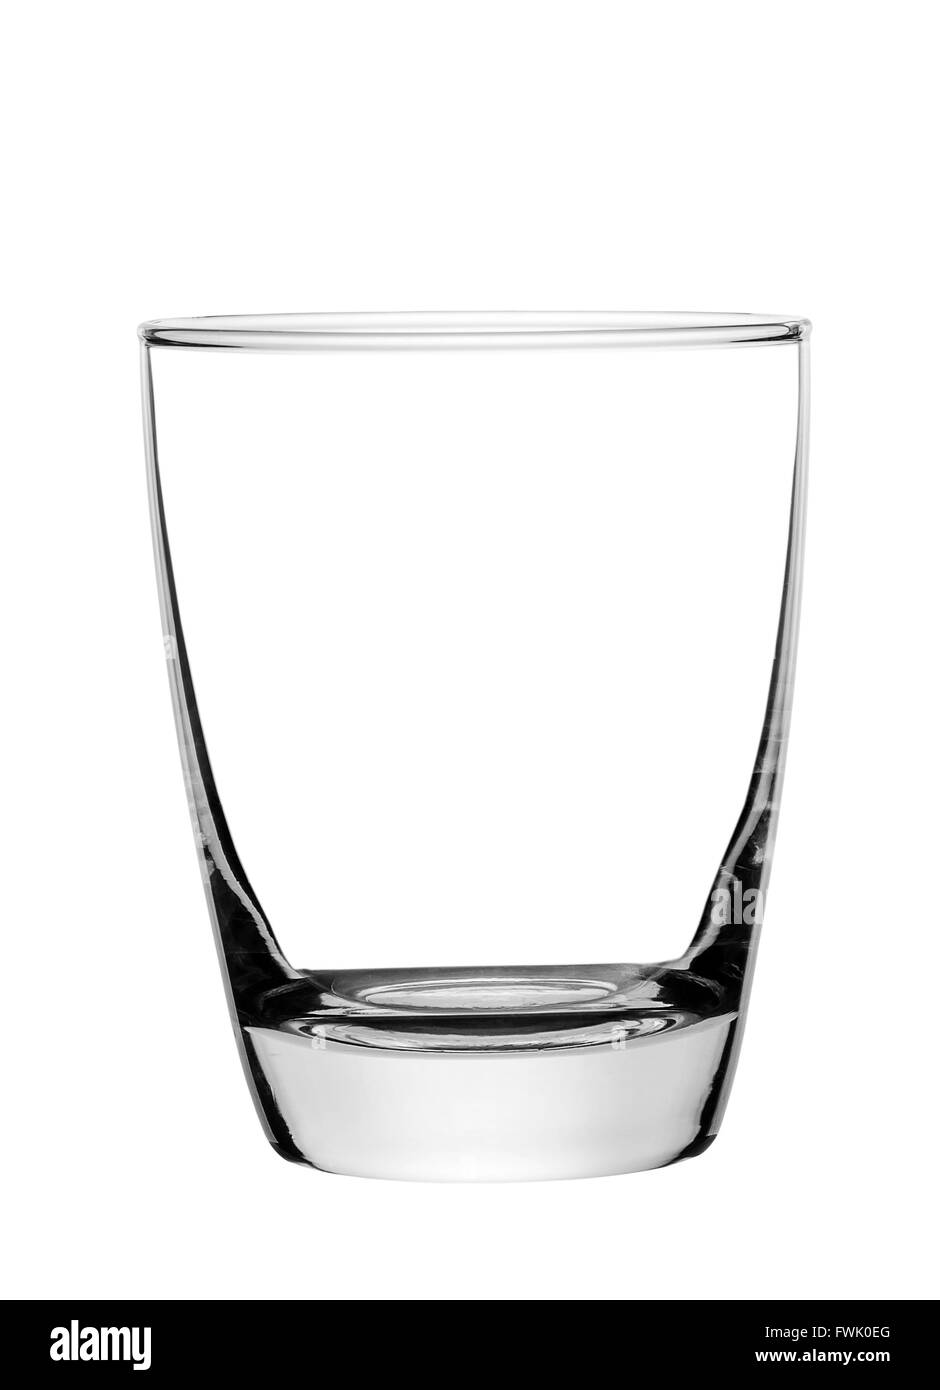 Empty glass on white background Stock Photo